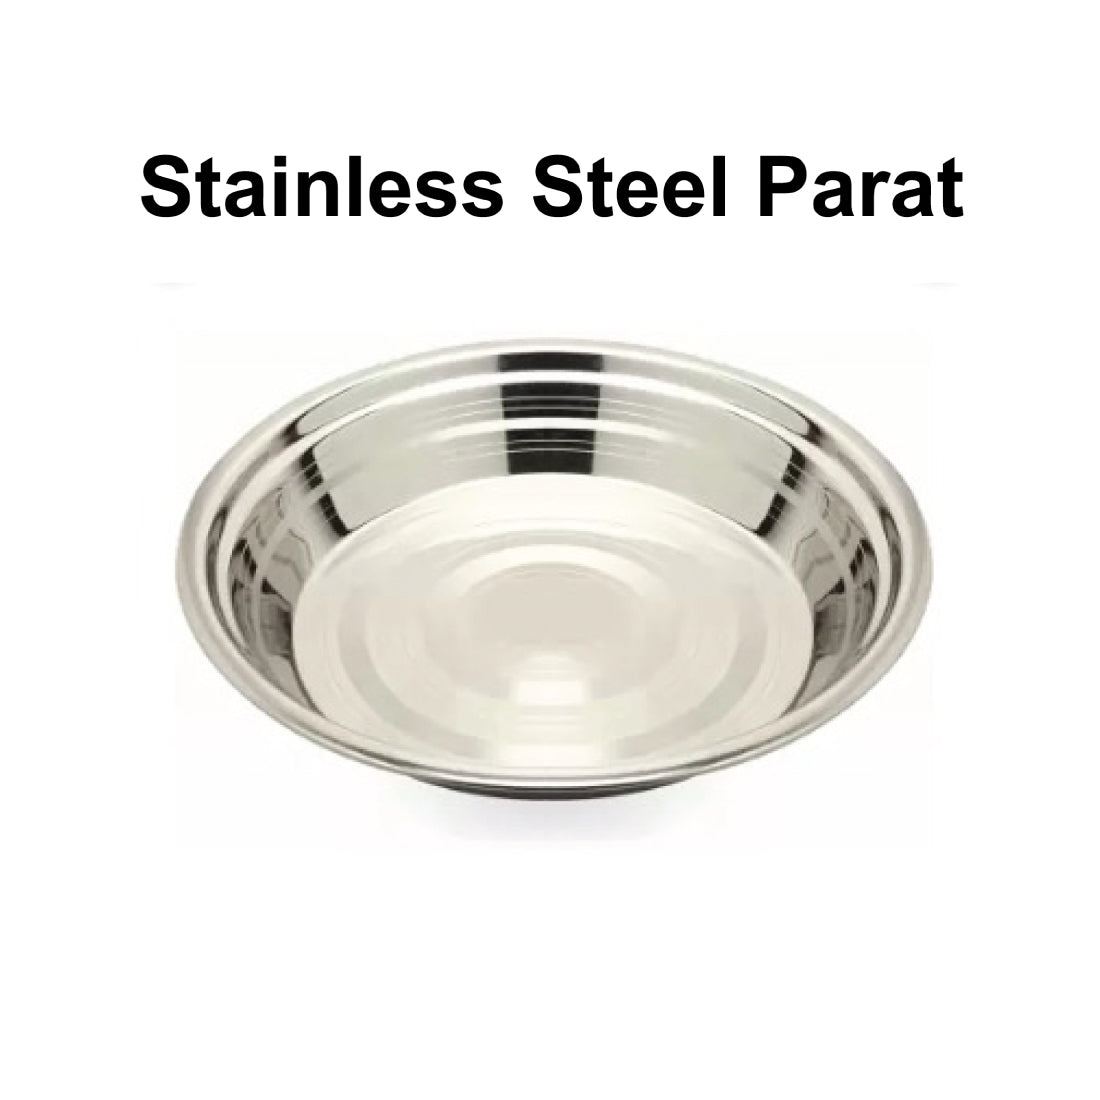 Stainless Steel Parat